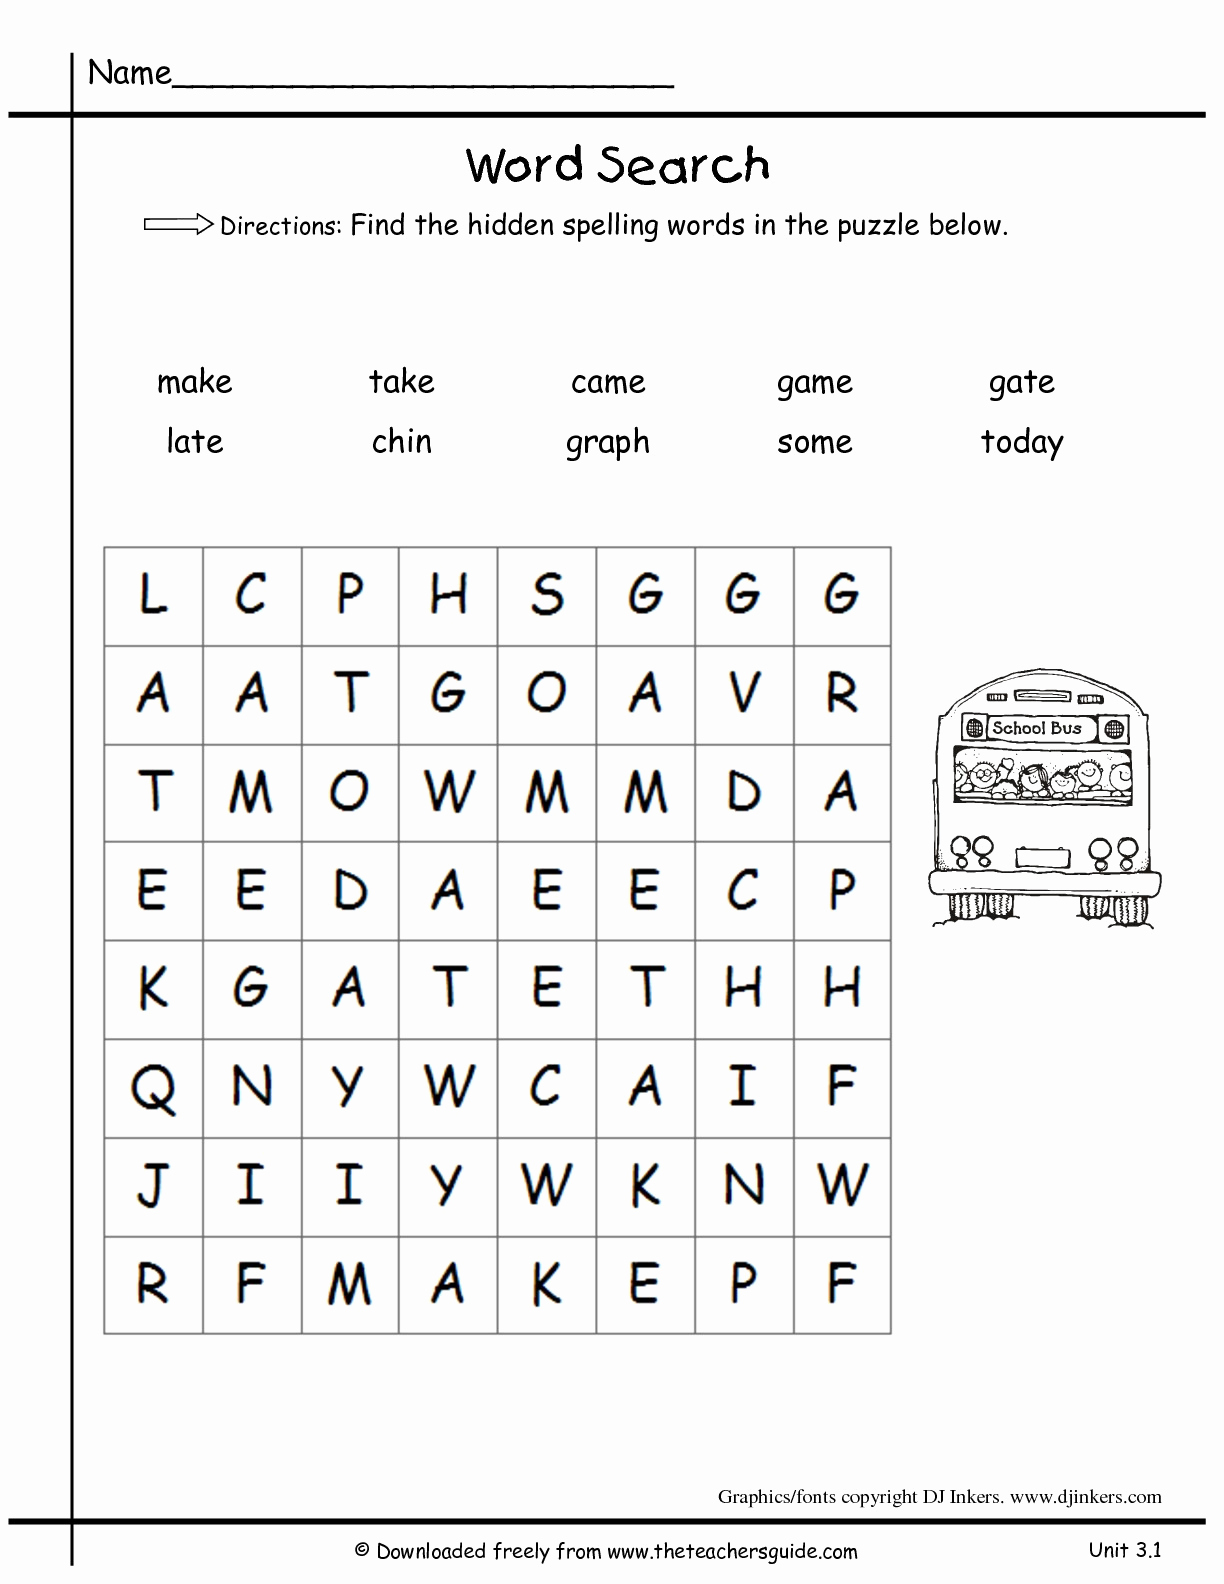 Second Grade Spelling Worksheets Lovely 2nd Grade Spelling Worksheets Pdf